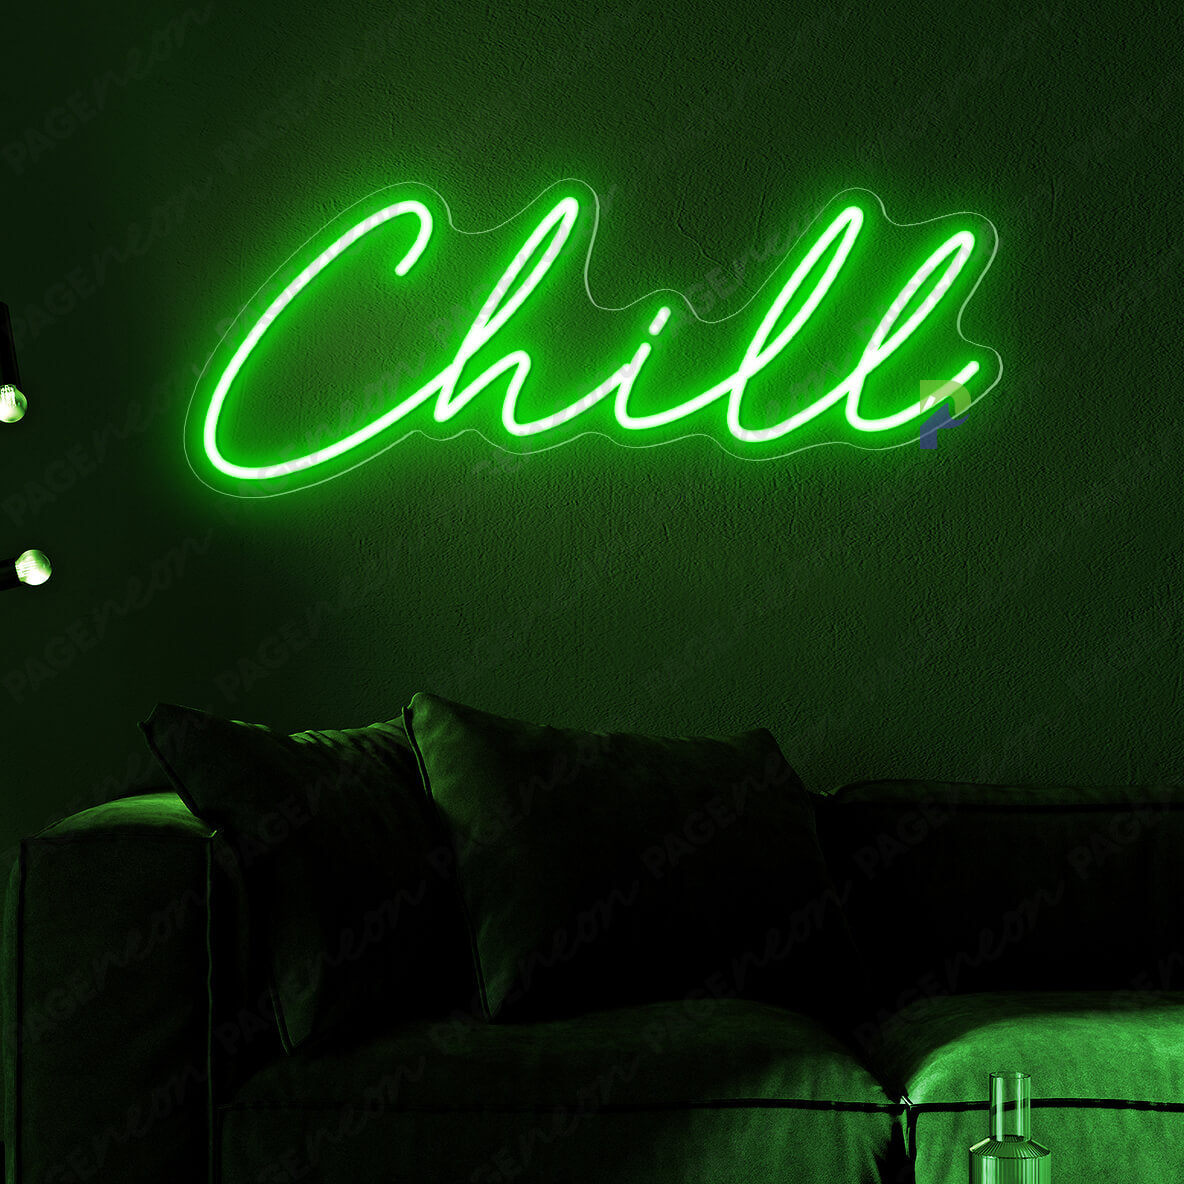 Chill Neon Sign Inspirational Led Light Green